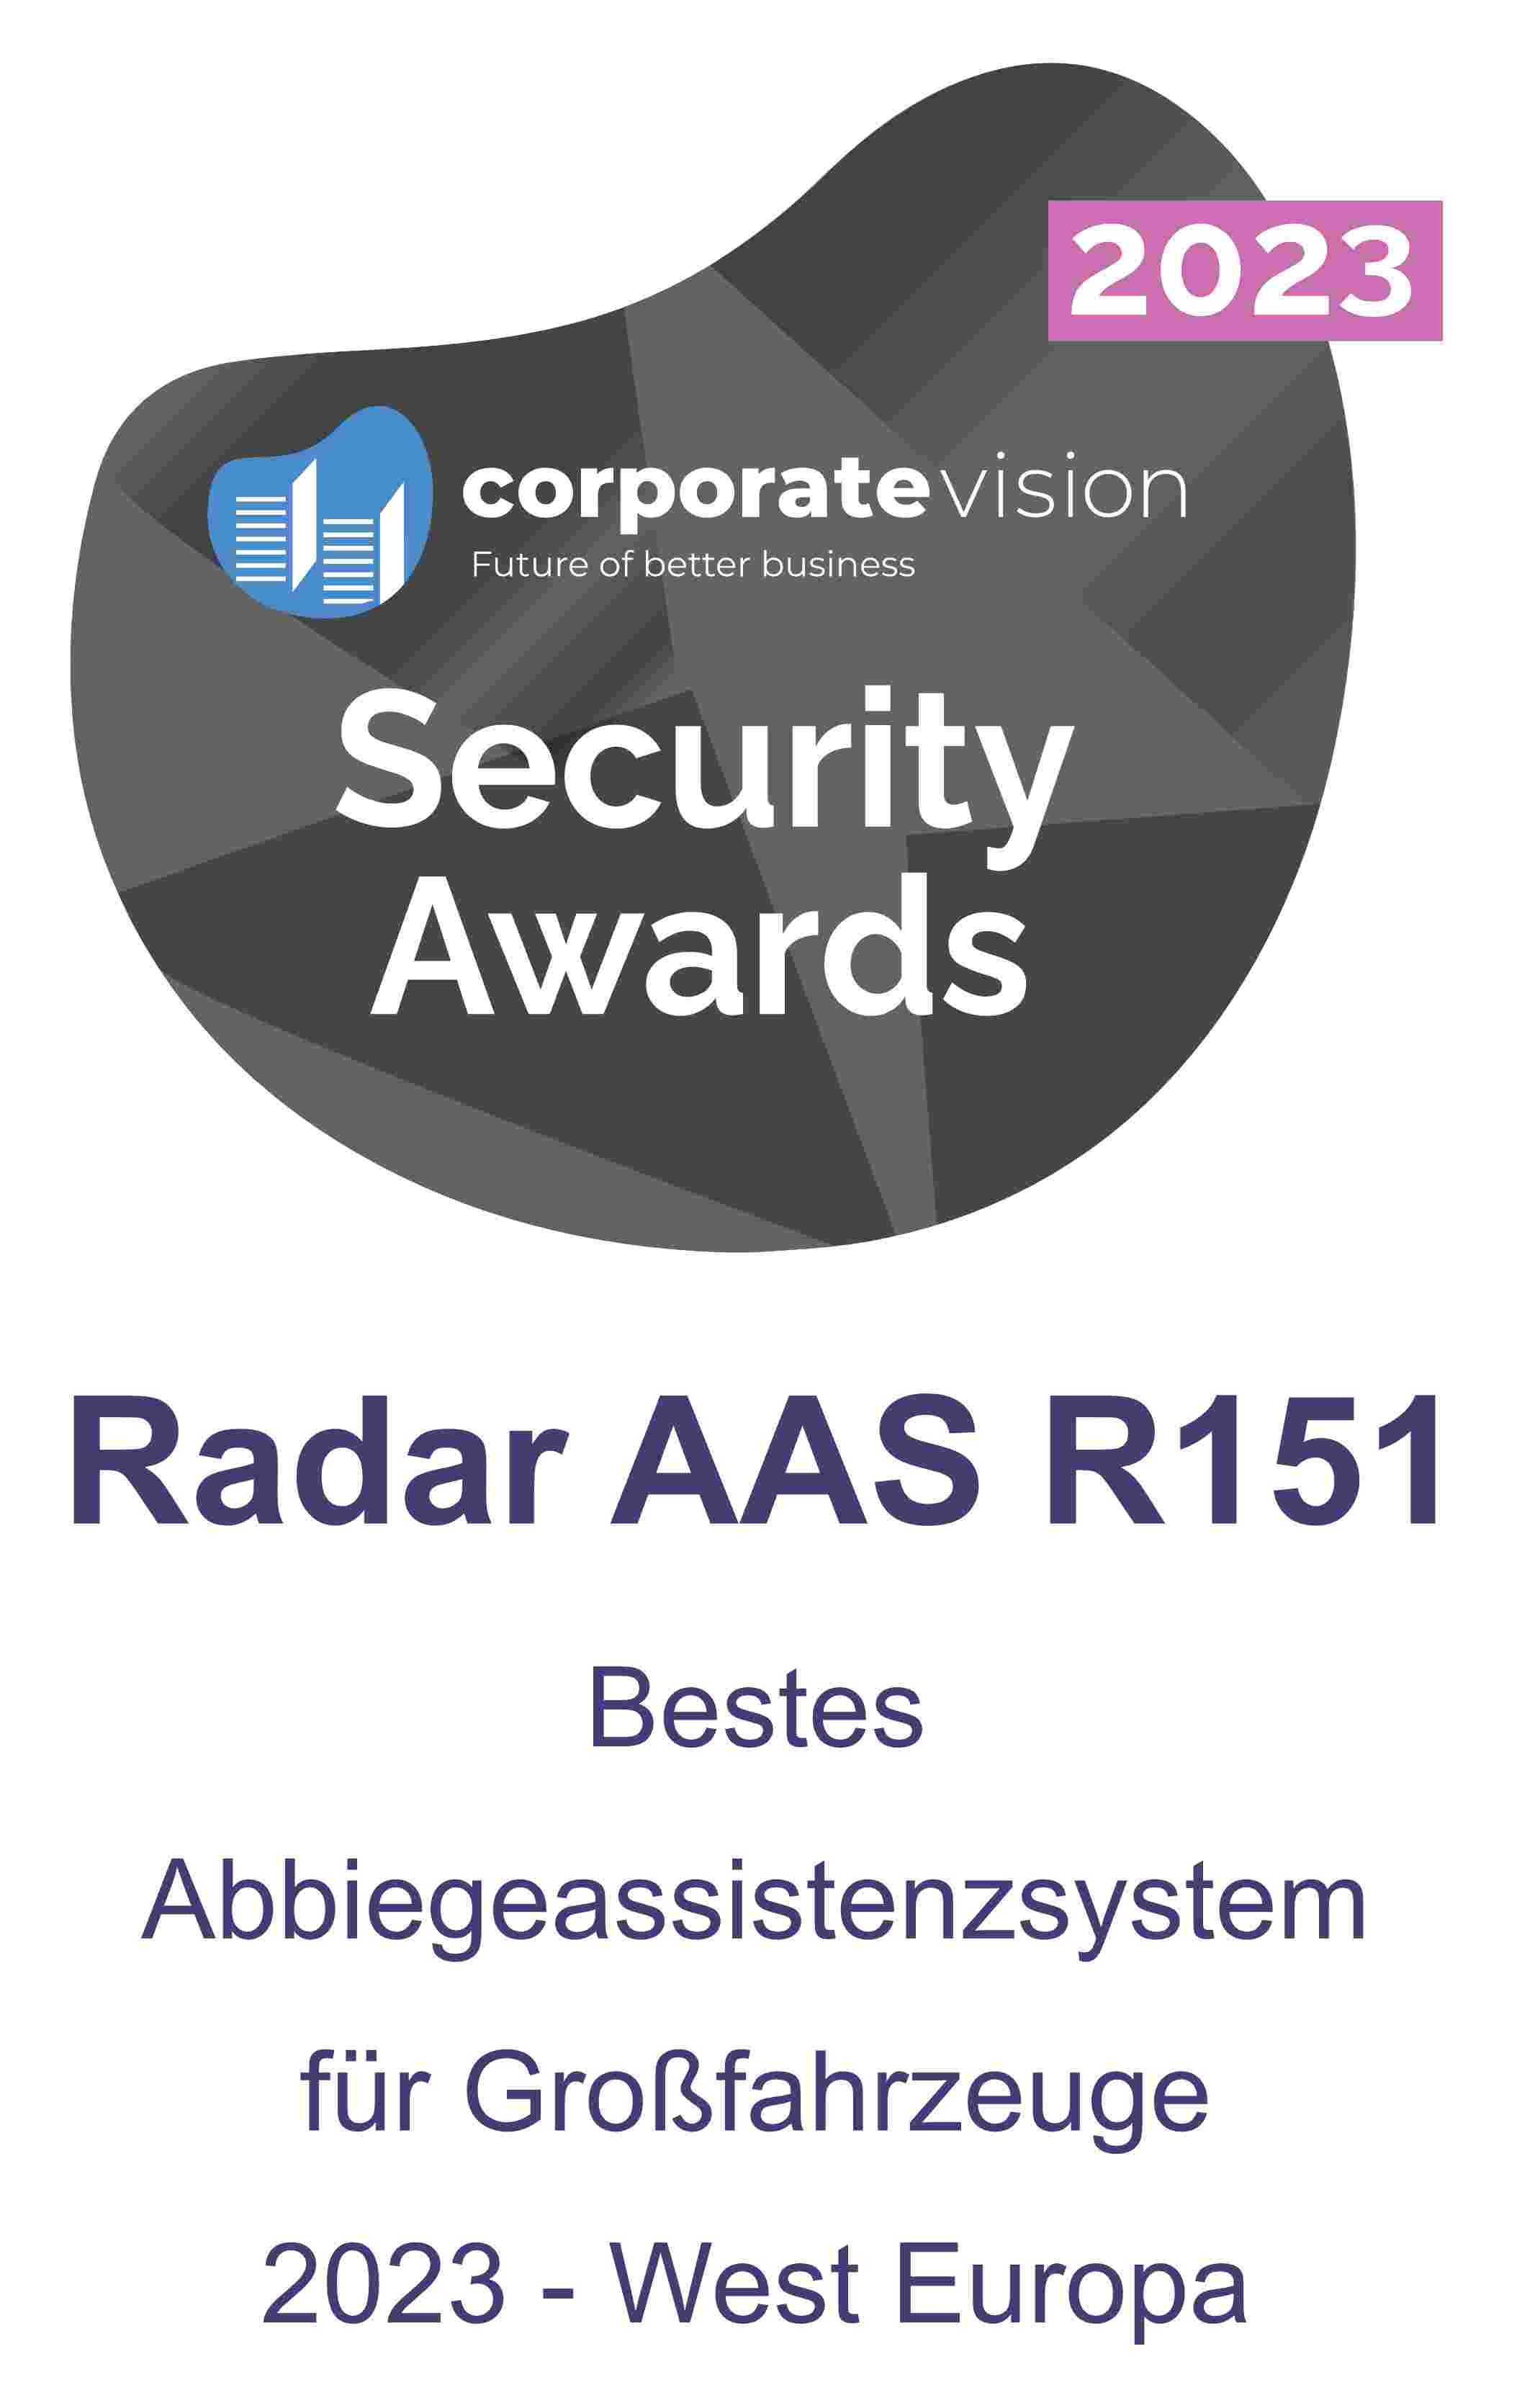 Award Radar R151 Bestes Abbiegeassistenzsystem 2023 West-Europa  TruckWarn